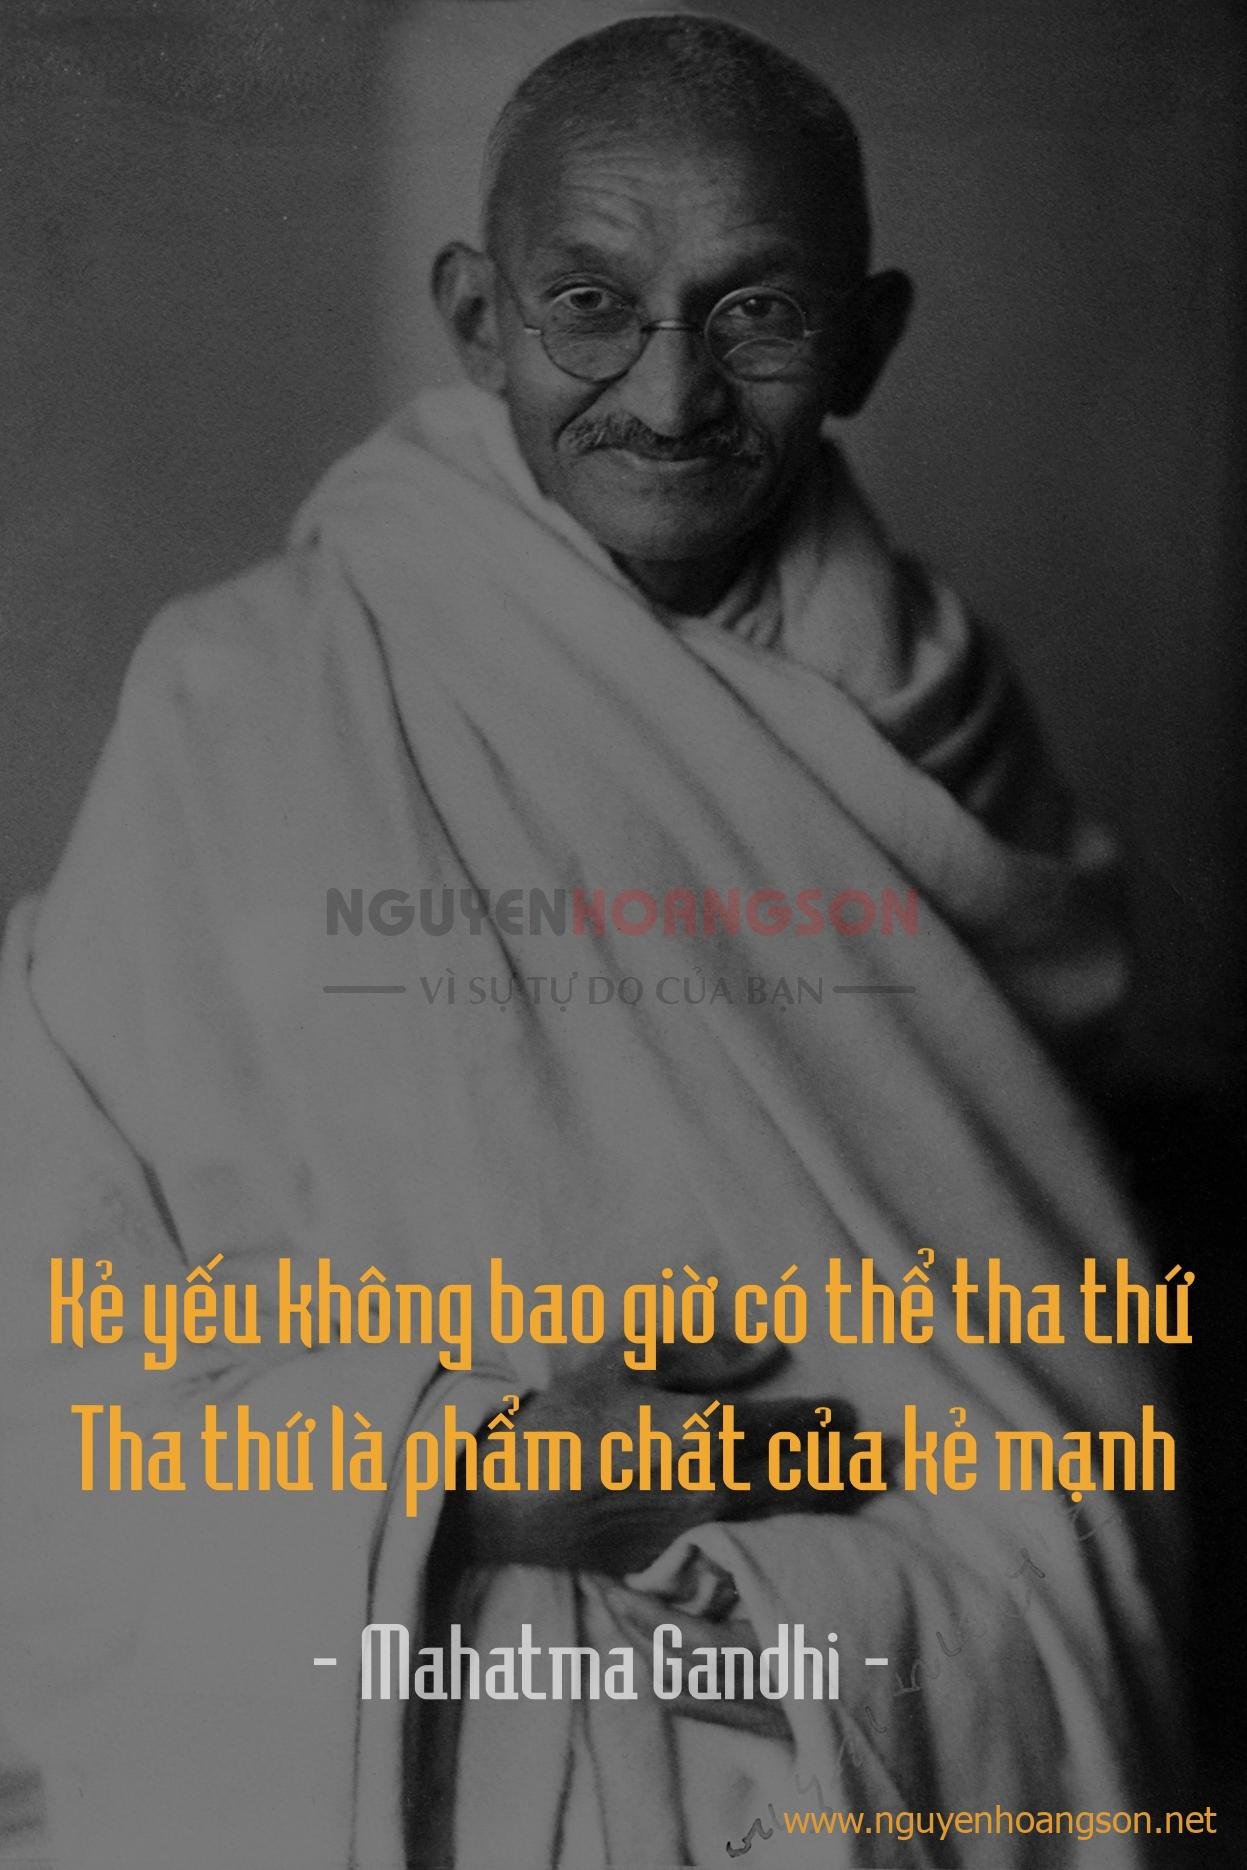 Mahatma Gandhi - Tha thứ